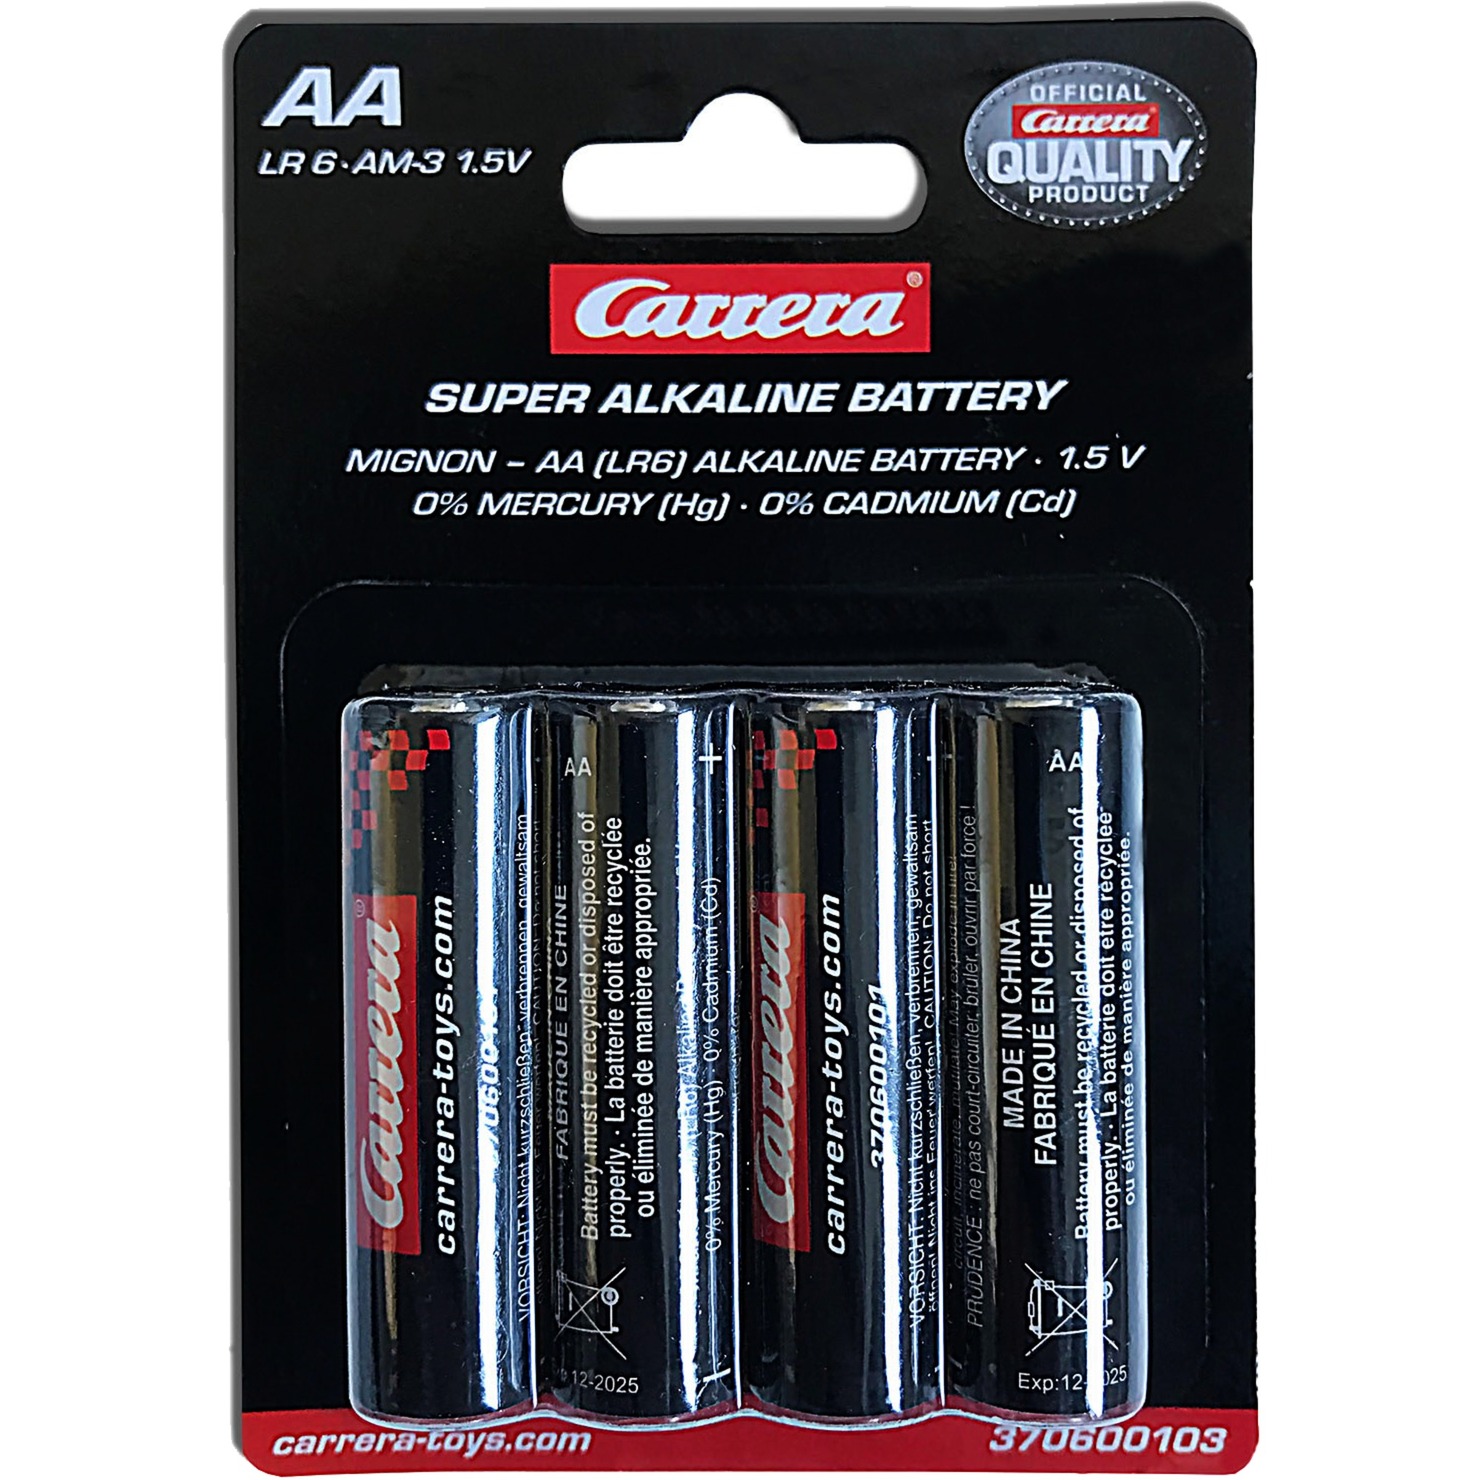 Image of Alternate - AA ALKALINE BATTERY (Tk) 8 pcs., Batterie online einkaufen bei Alternate